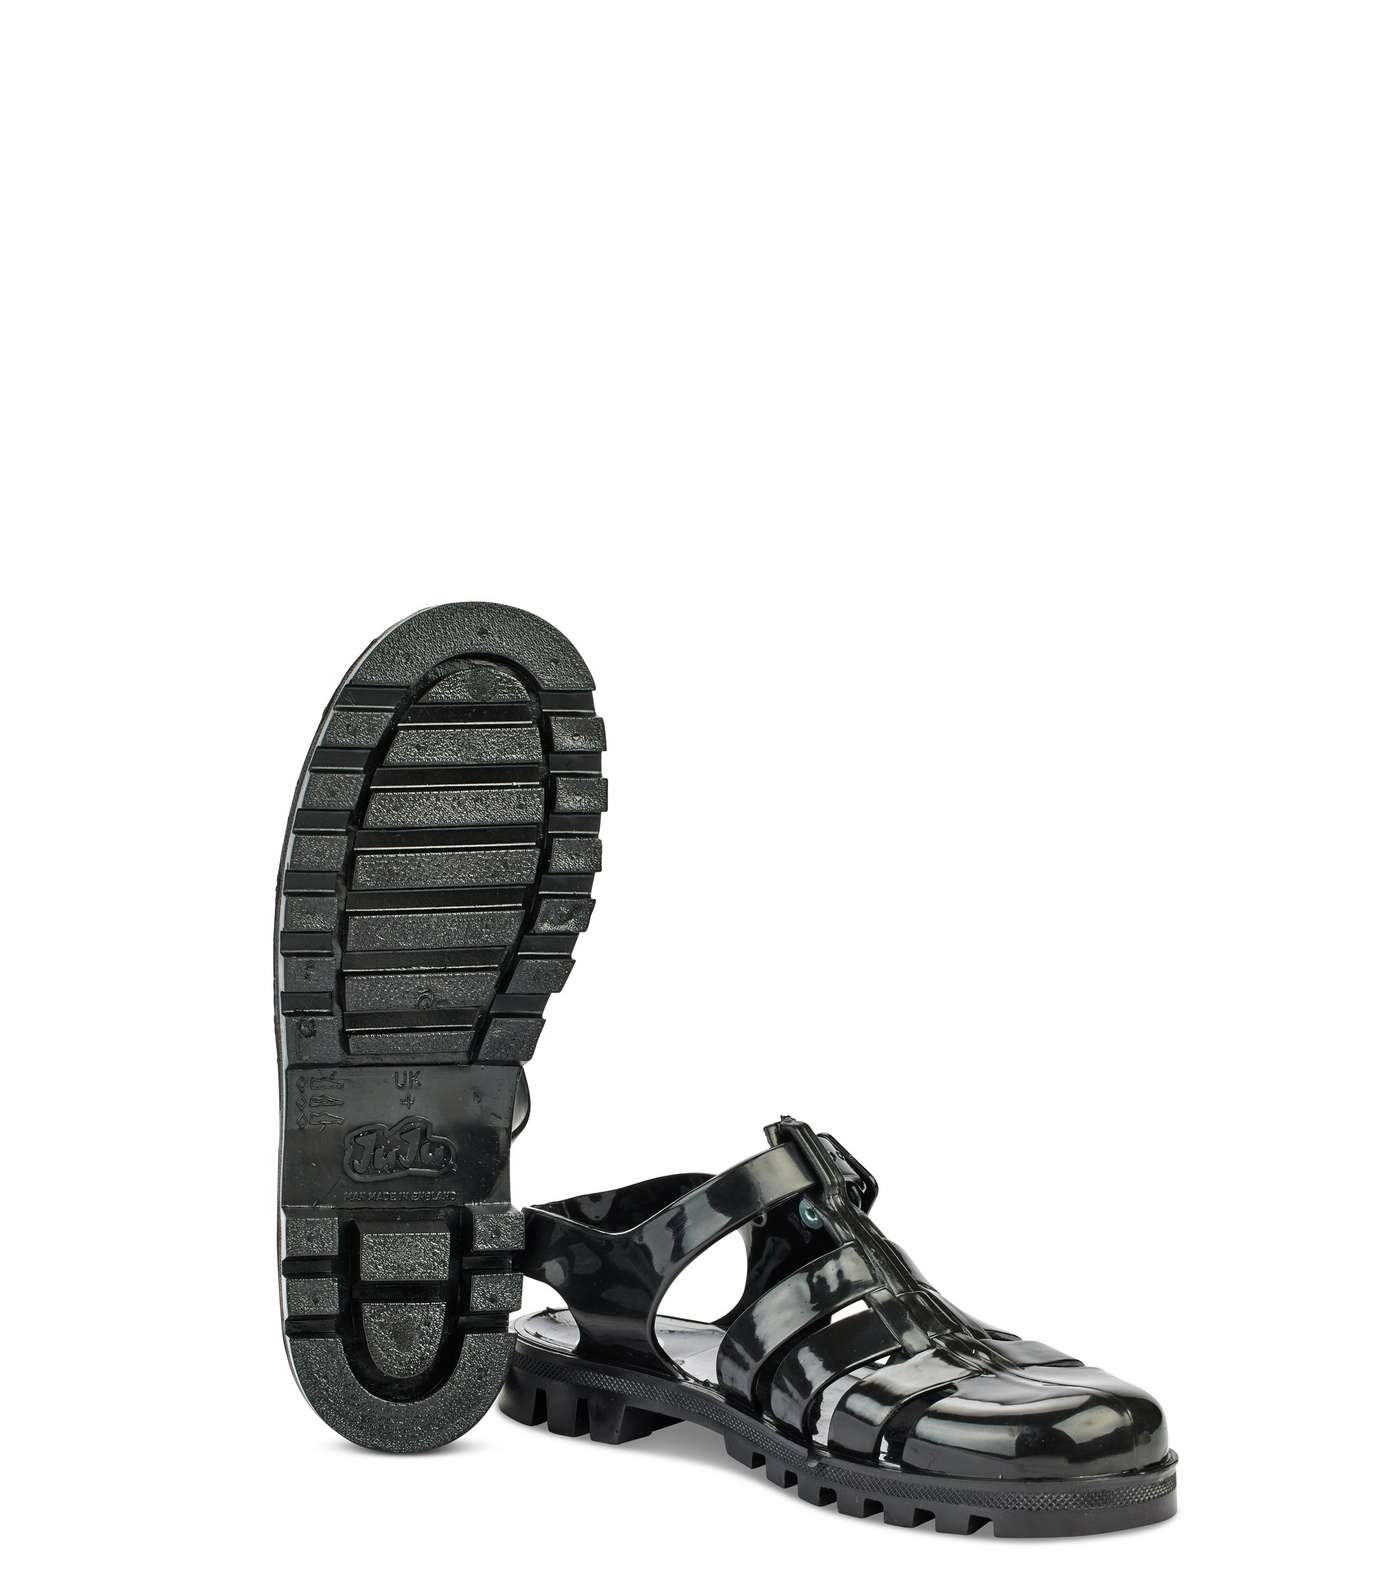 JUJU Black Jelly Sandals Image 3